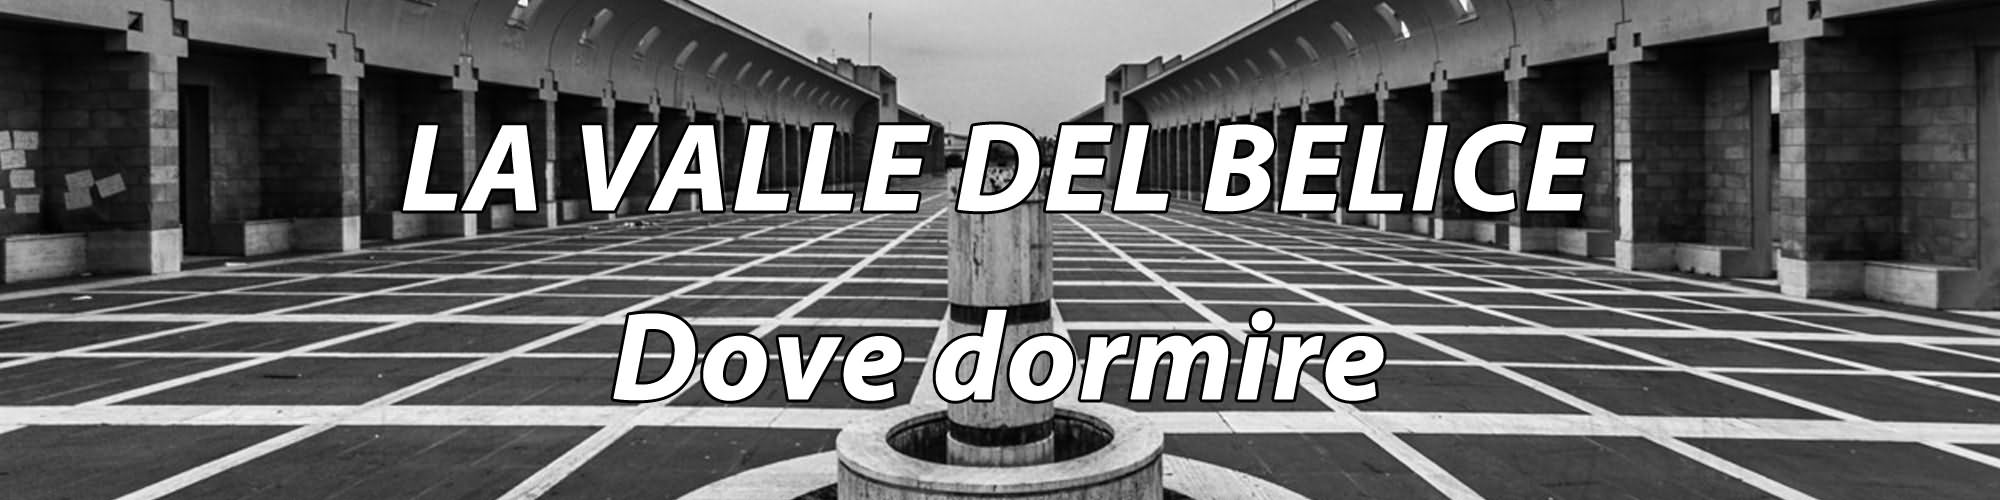 valle_del_belice_dove_dormire